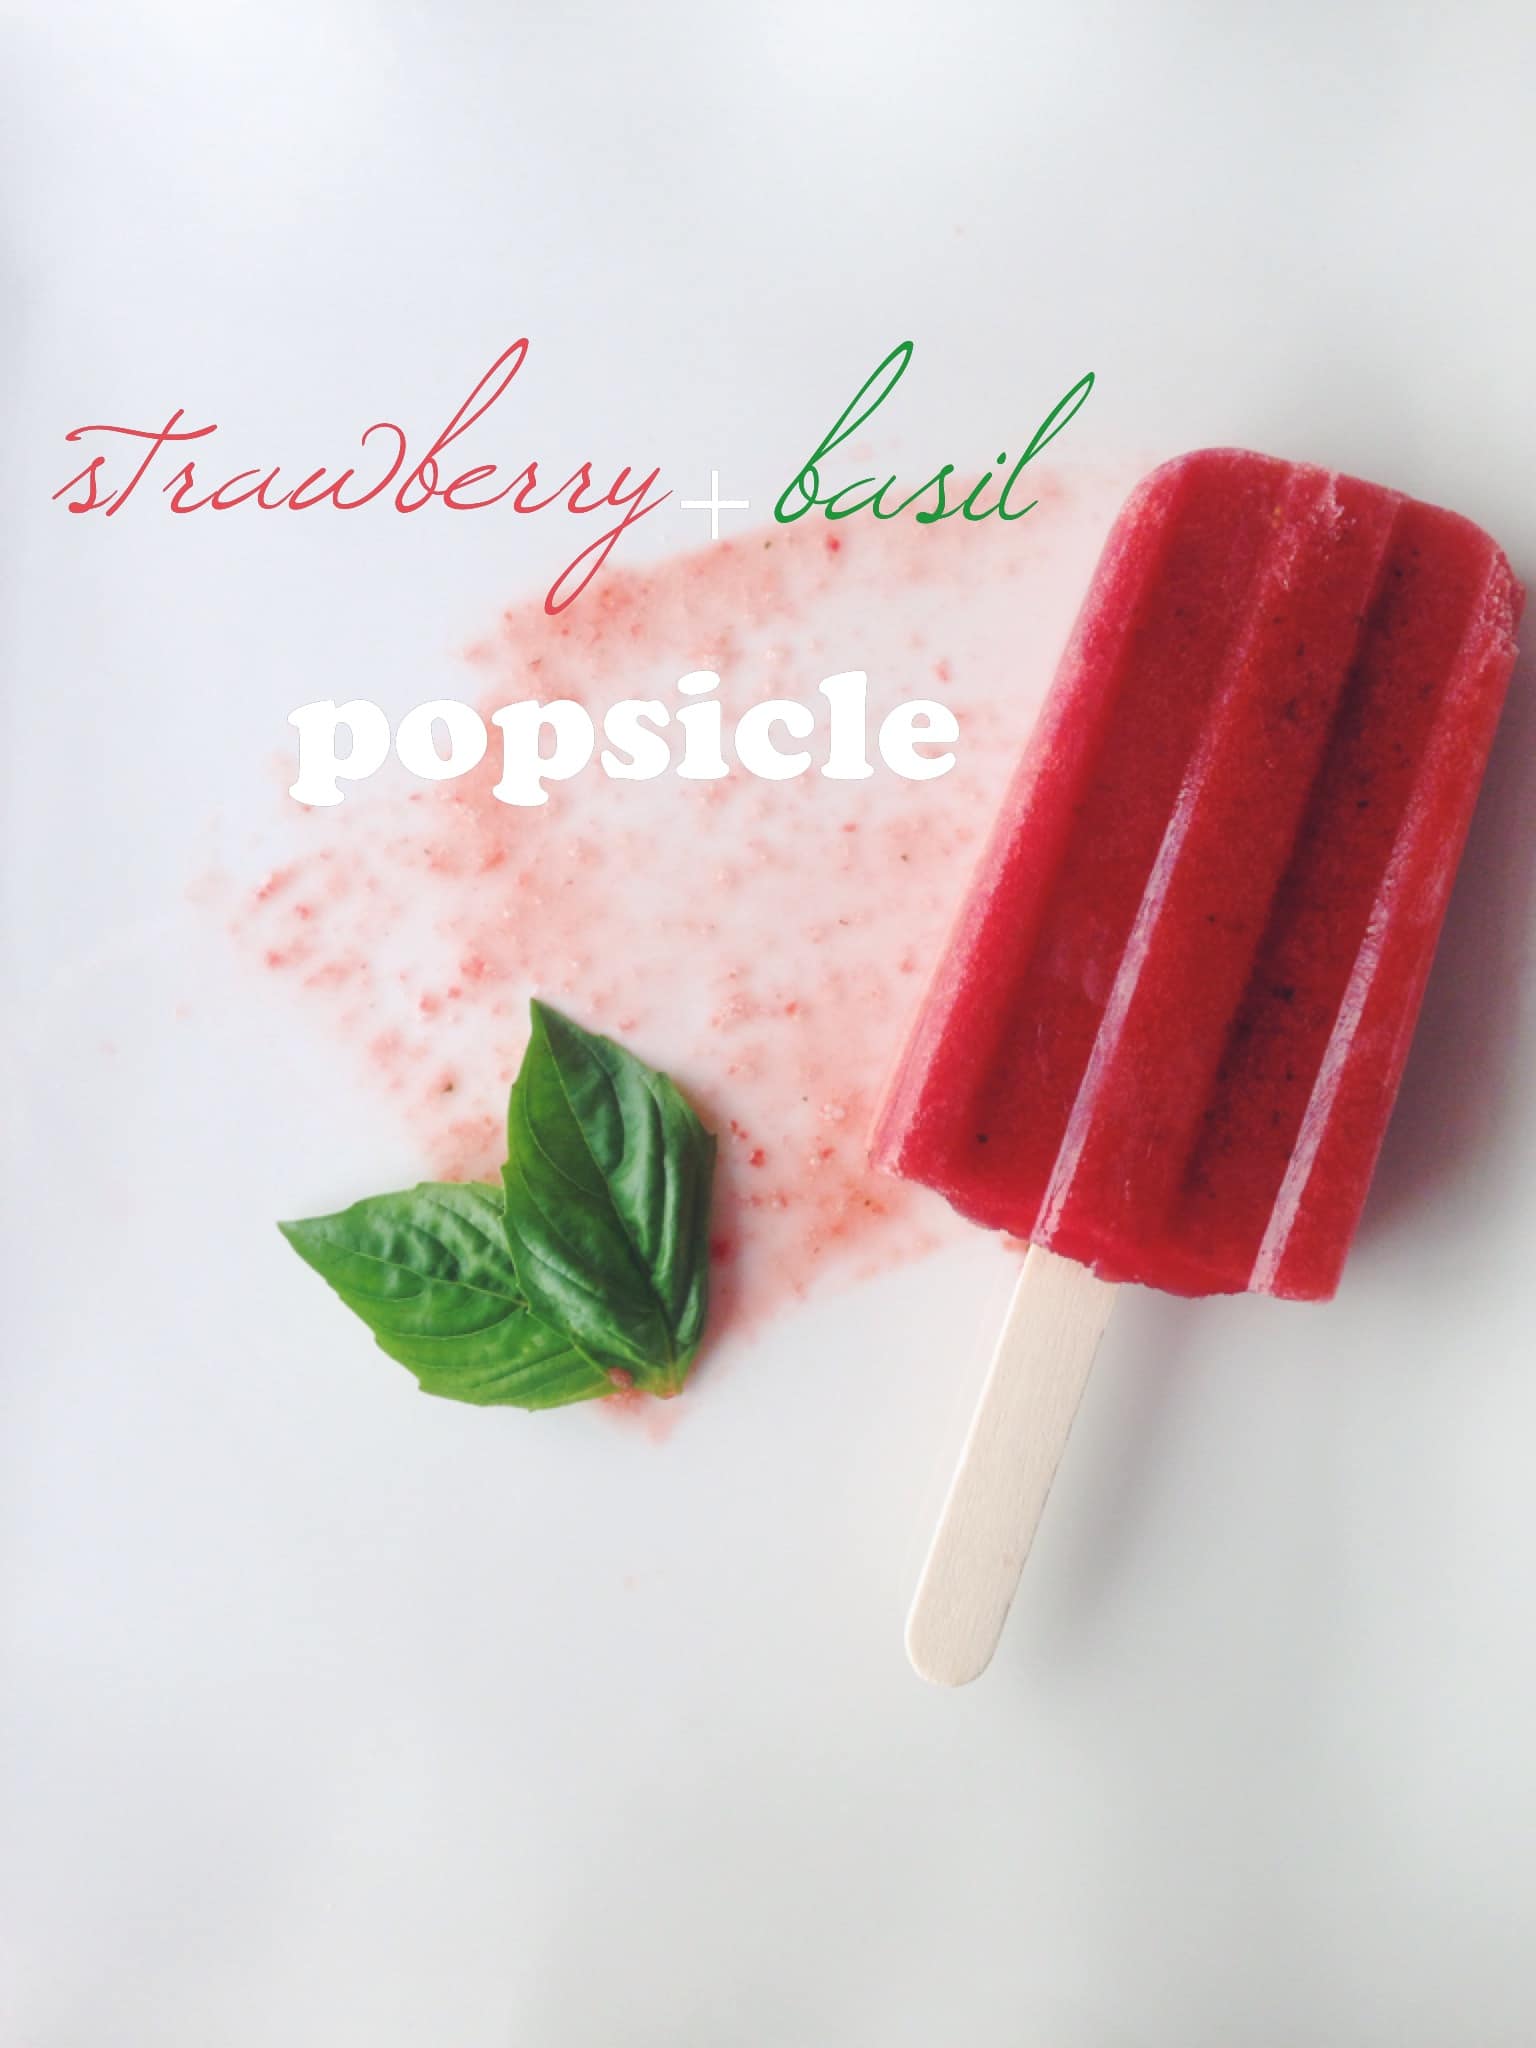 Strawberry+Basil Popsicle